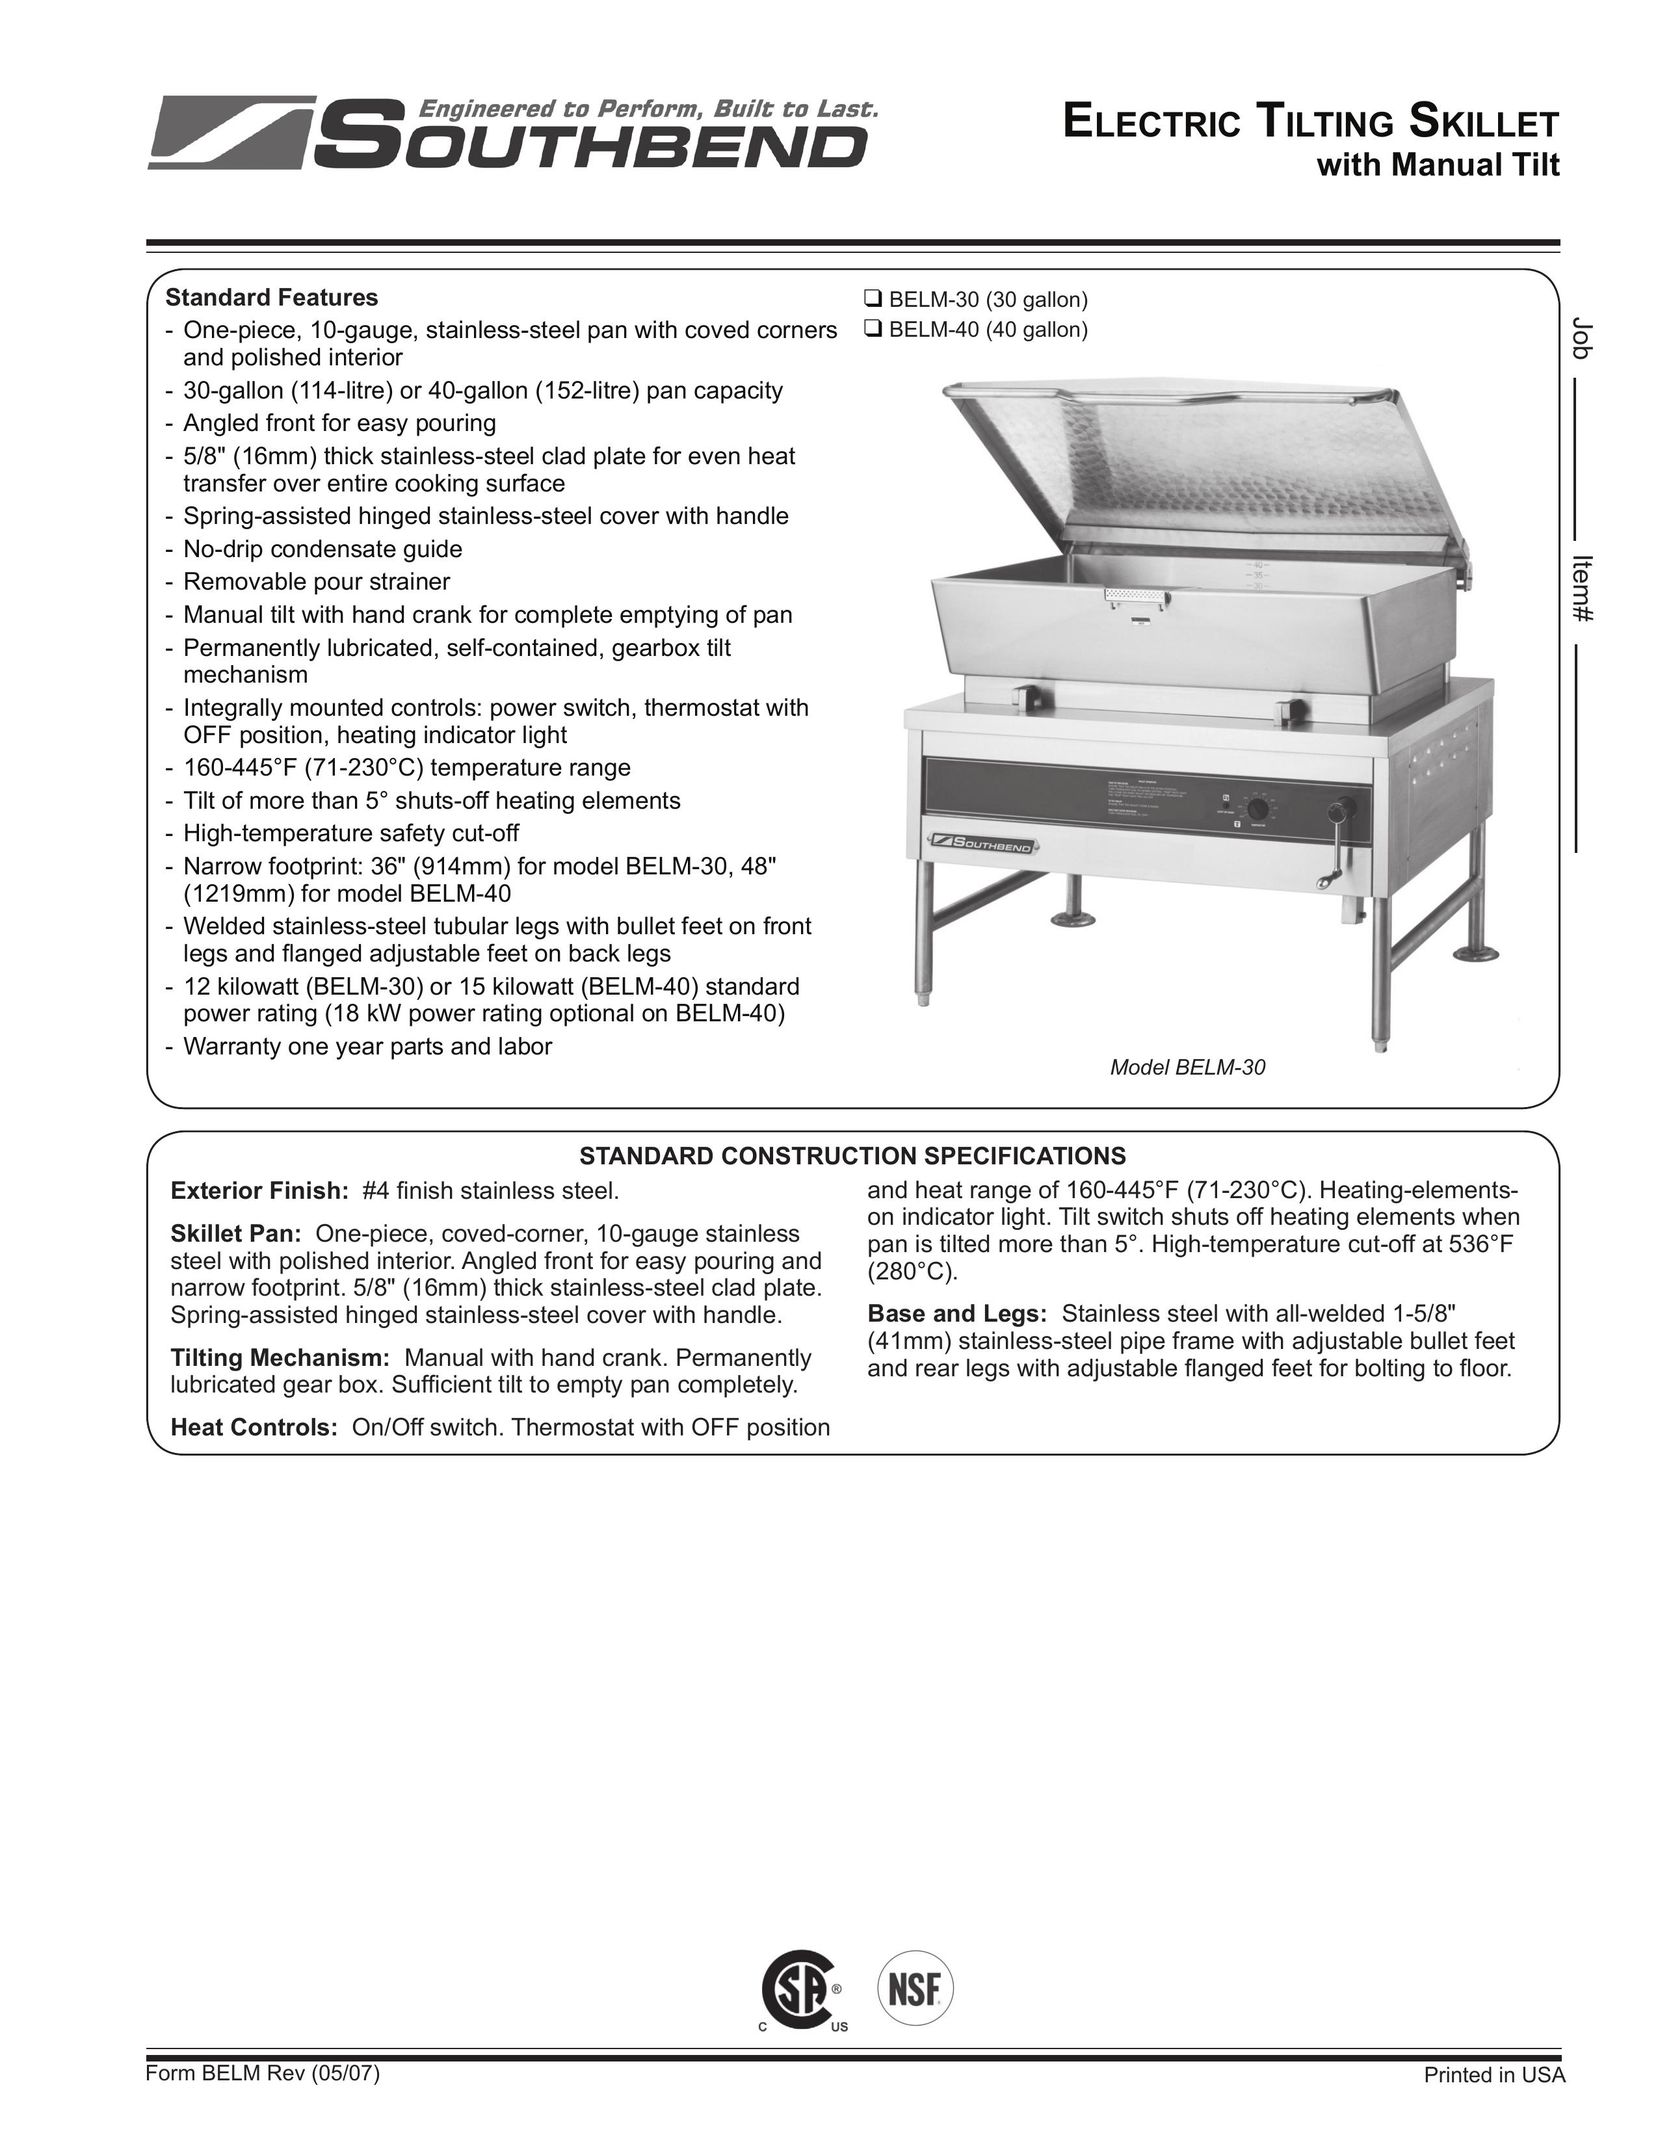 Southbend BELM-30 Fryer User Manual